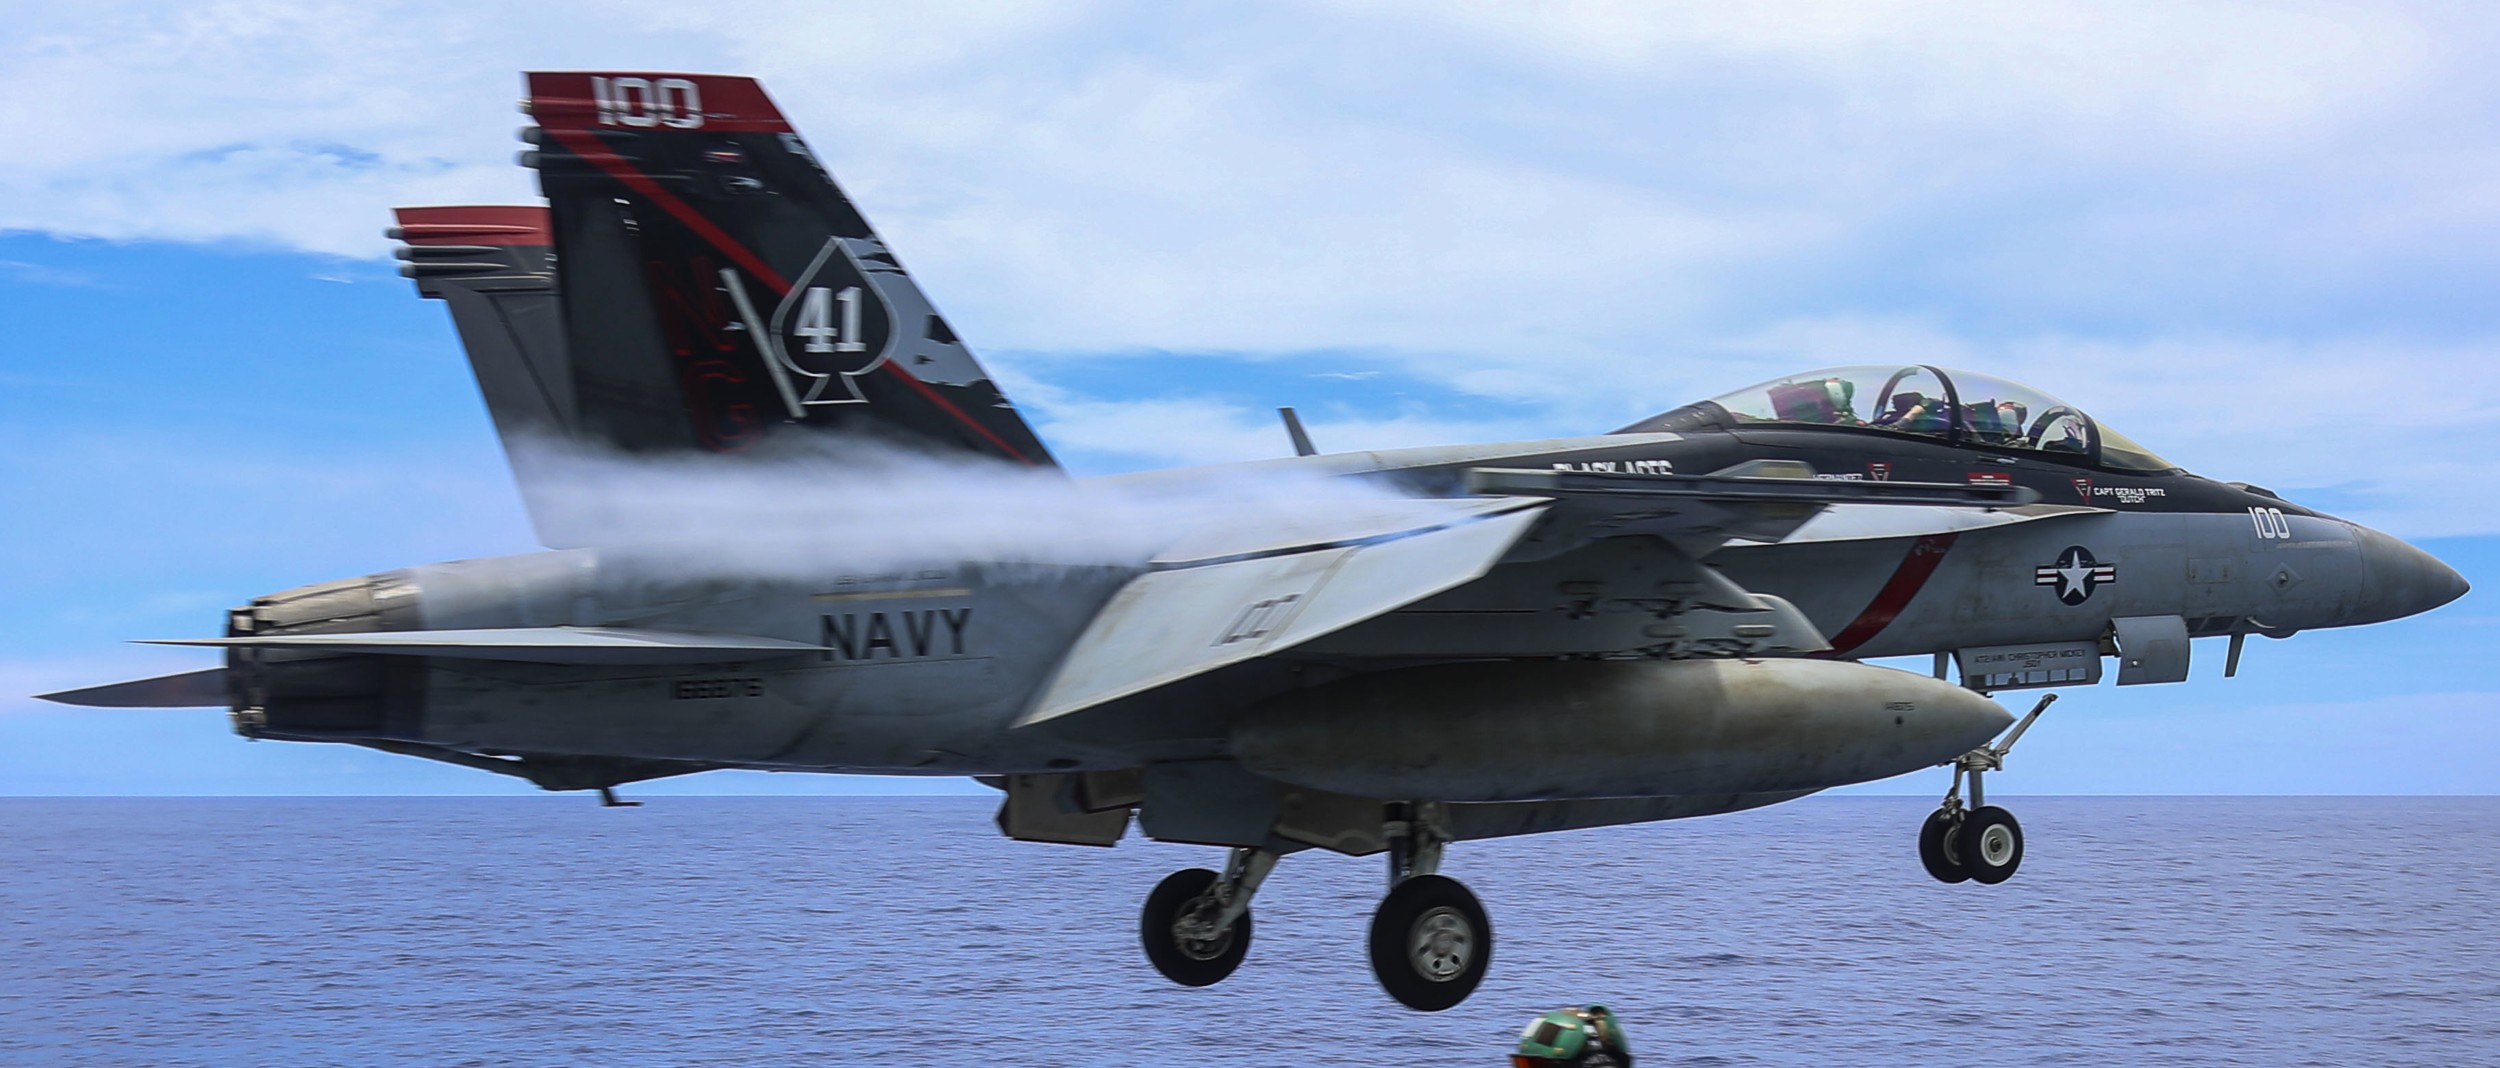 vfa-41 black aces strike fighter squadron f/a-18f super hornet cvw-9 cvn-72 uss abraham lincoln us navy 90